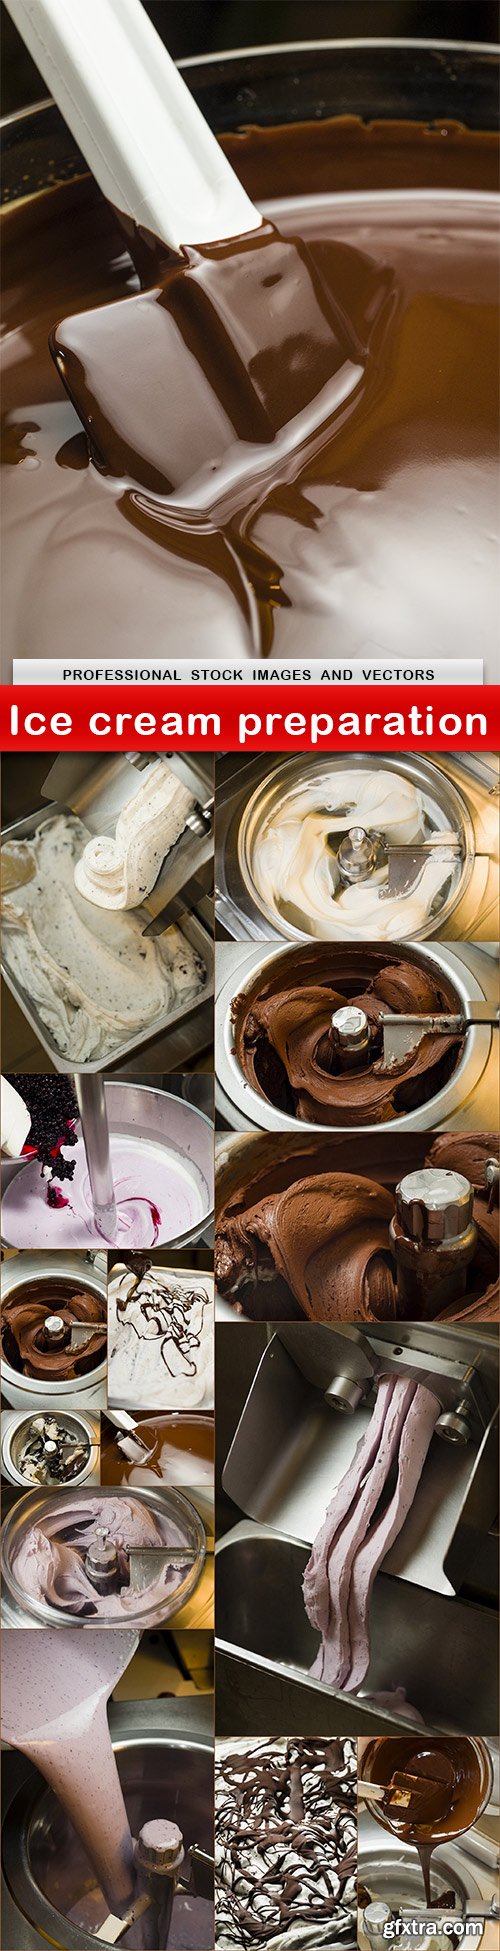 Ice cream preparation - 15 UHQ JPEG